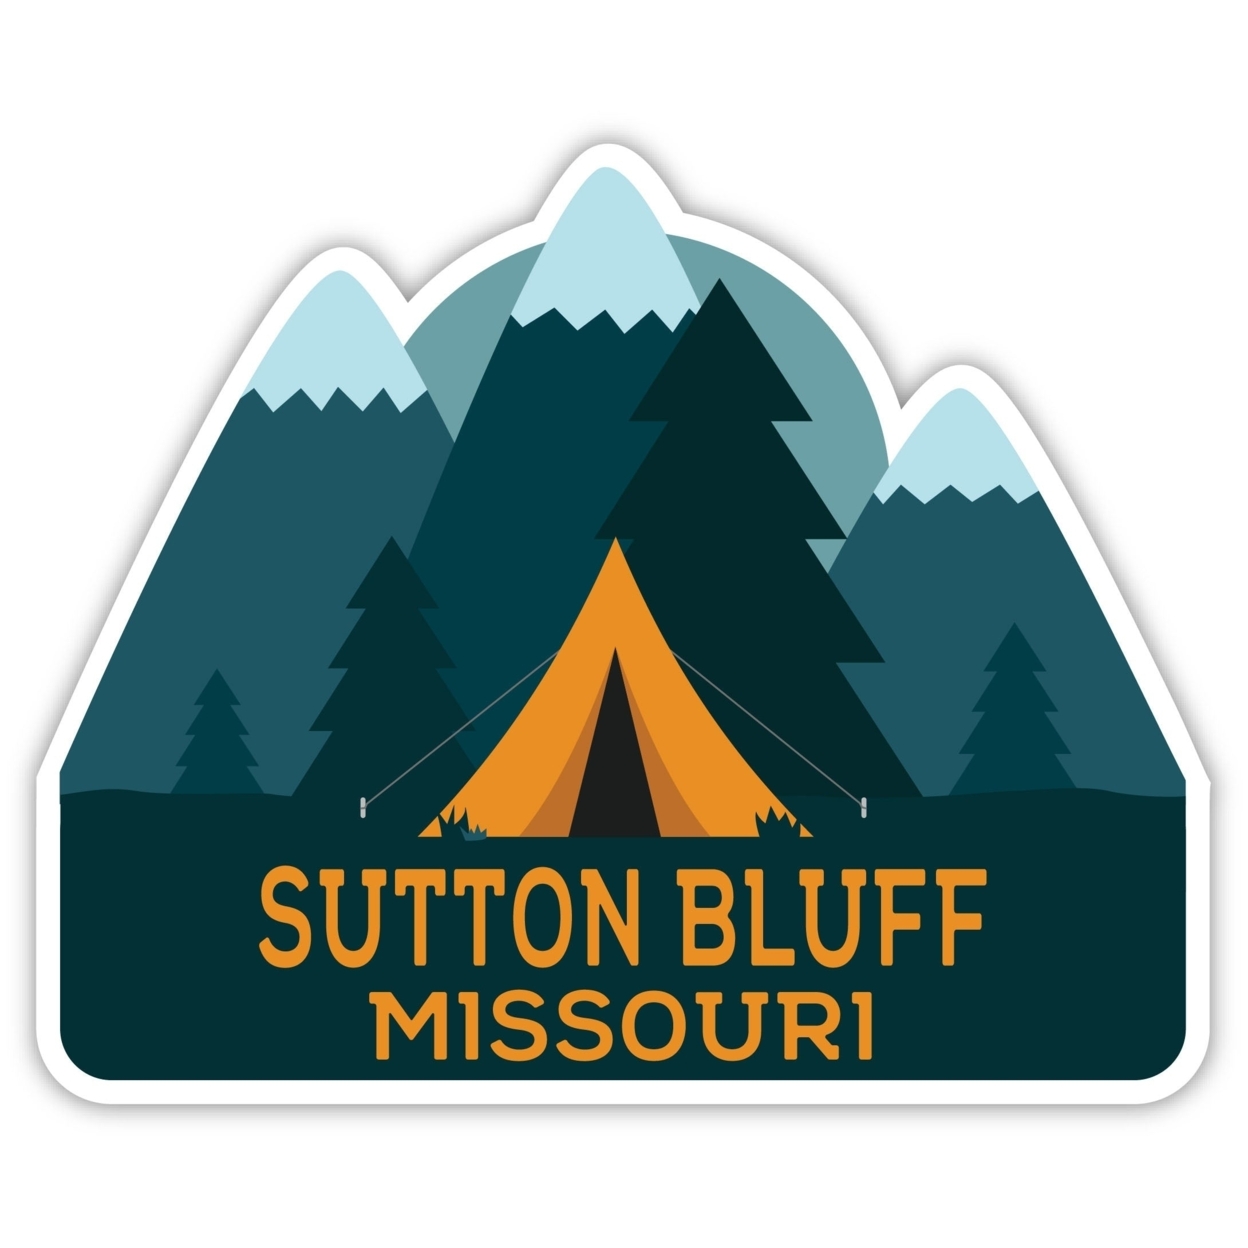 Sutton Bluff Missouri Souvenir Decorative Stickers (Choose Theme And Size) - Single Unit, 2-Inch, Tent